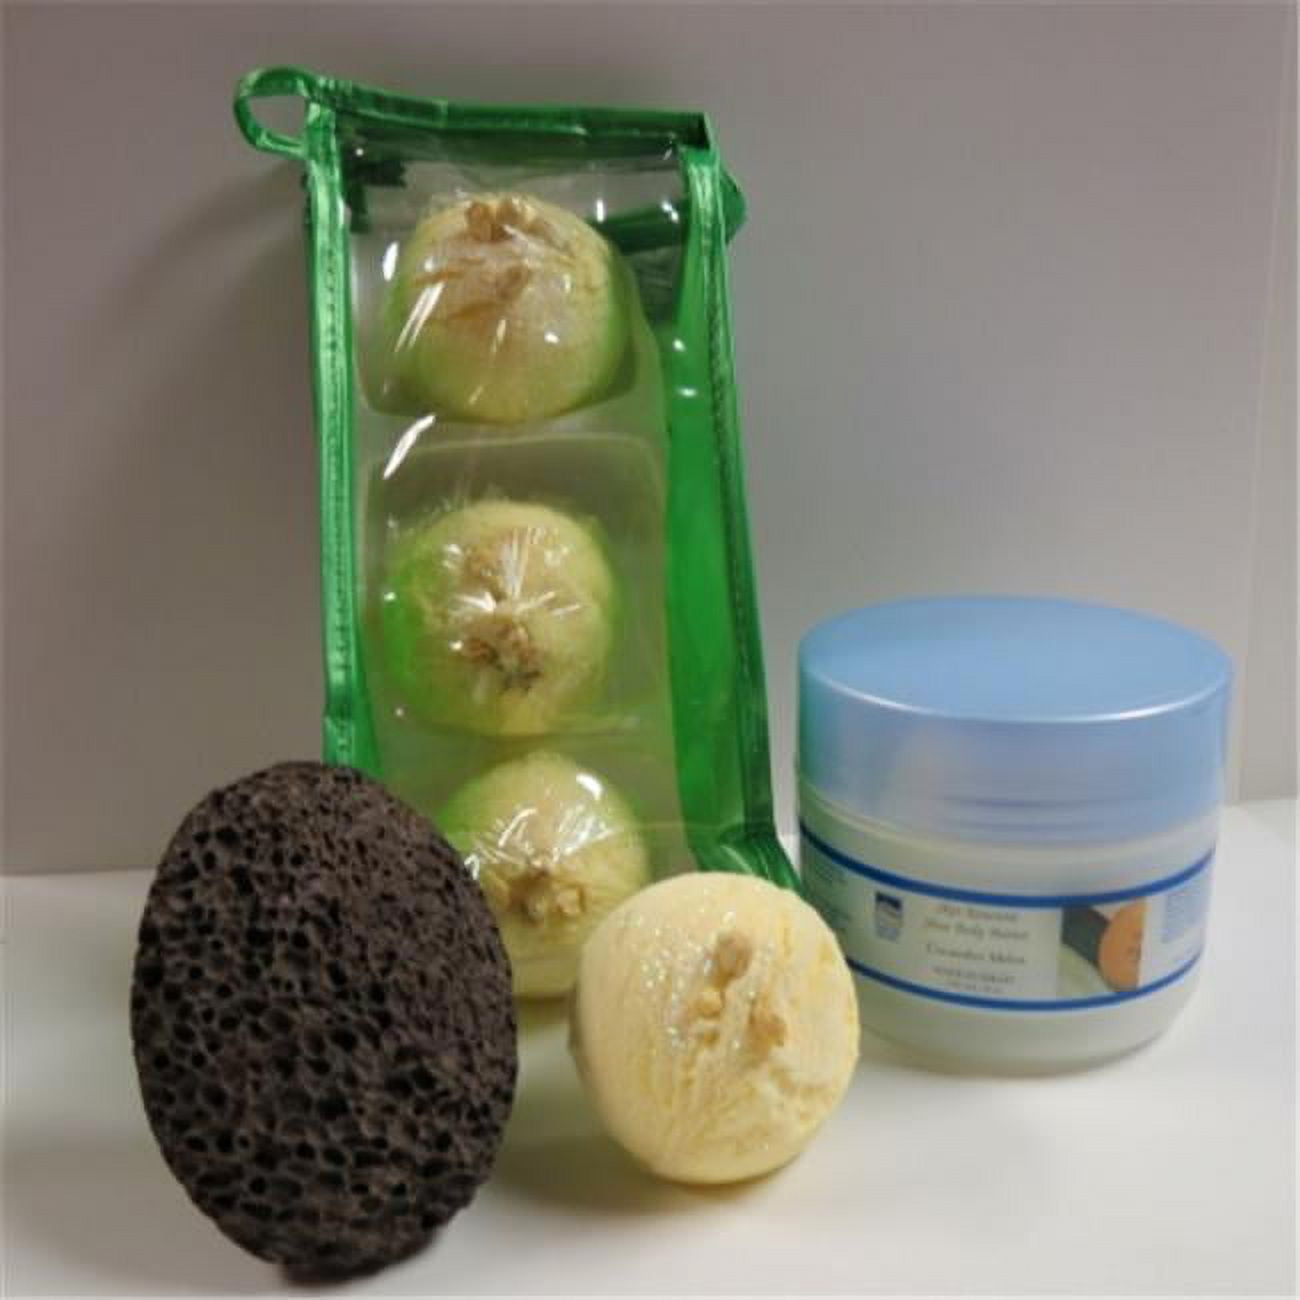 Deadsea-bbtcocl03 3 Pack Coconut Lime Bubble Bath Truffles, 8 Oz Cucumber & Melon Shea Body Butter & Pumice Stone